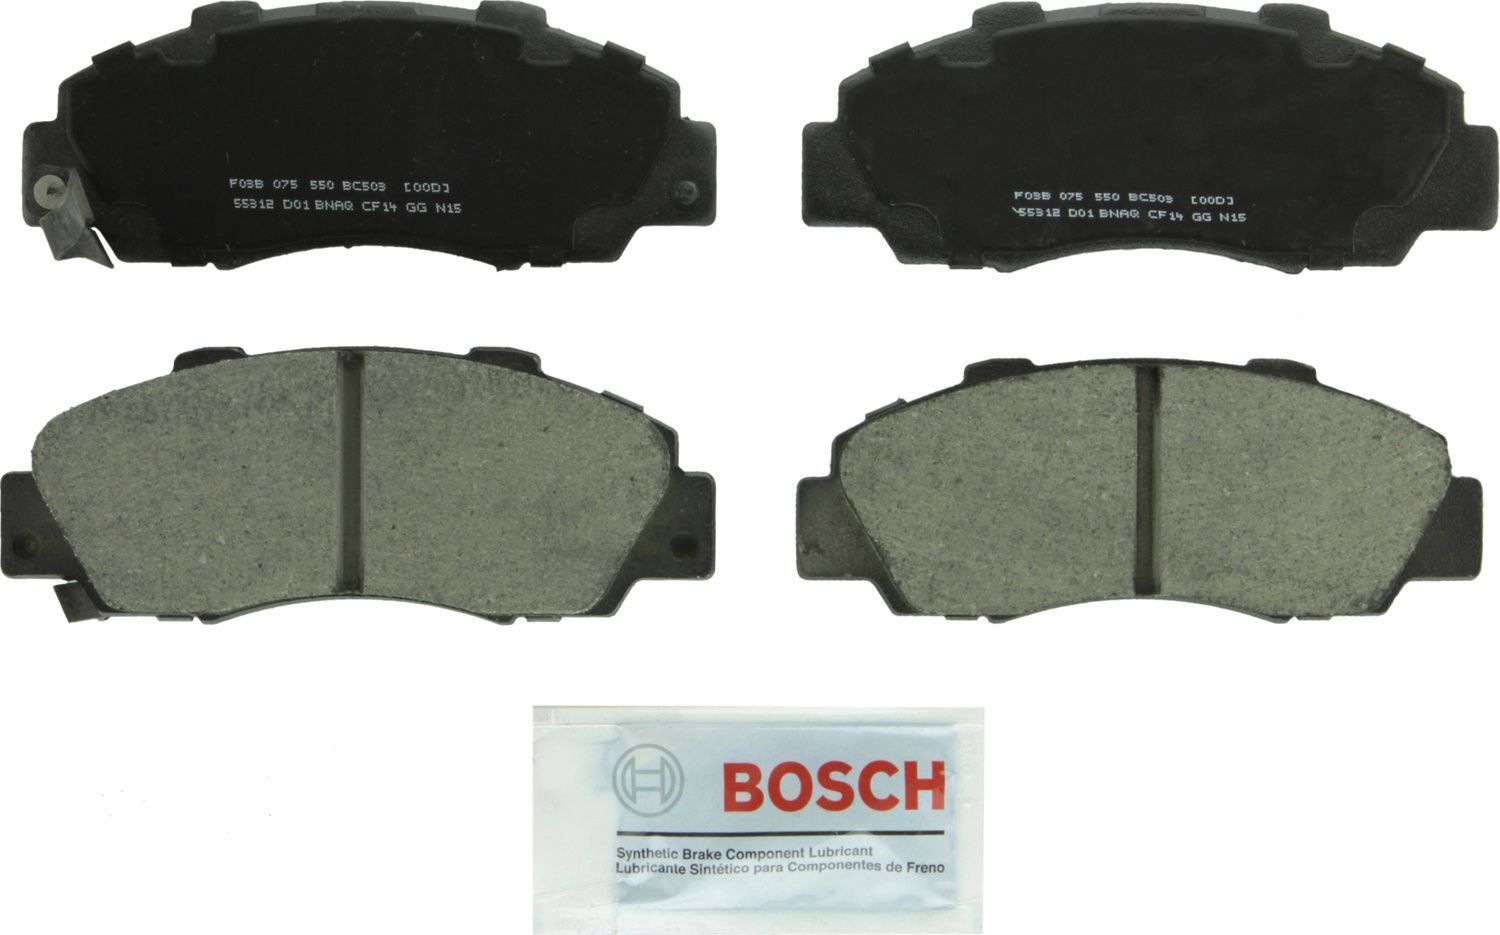 BOSCH BRAKE - Bosch QuietCast Brake Pad Ceramic Brake Pads (Front) - BQC BC503